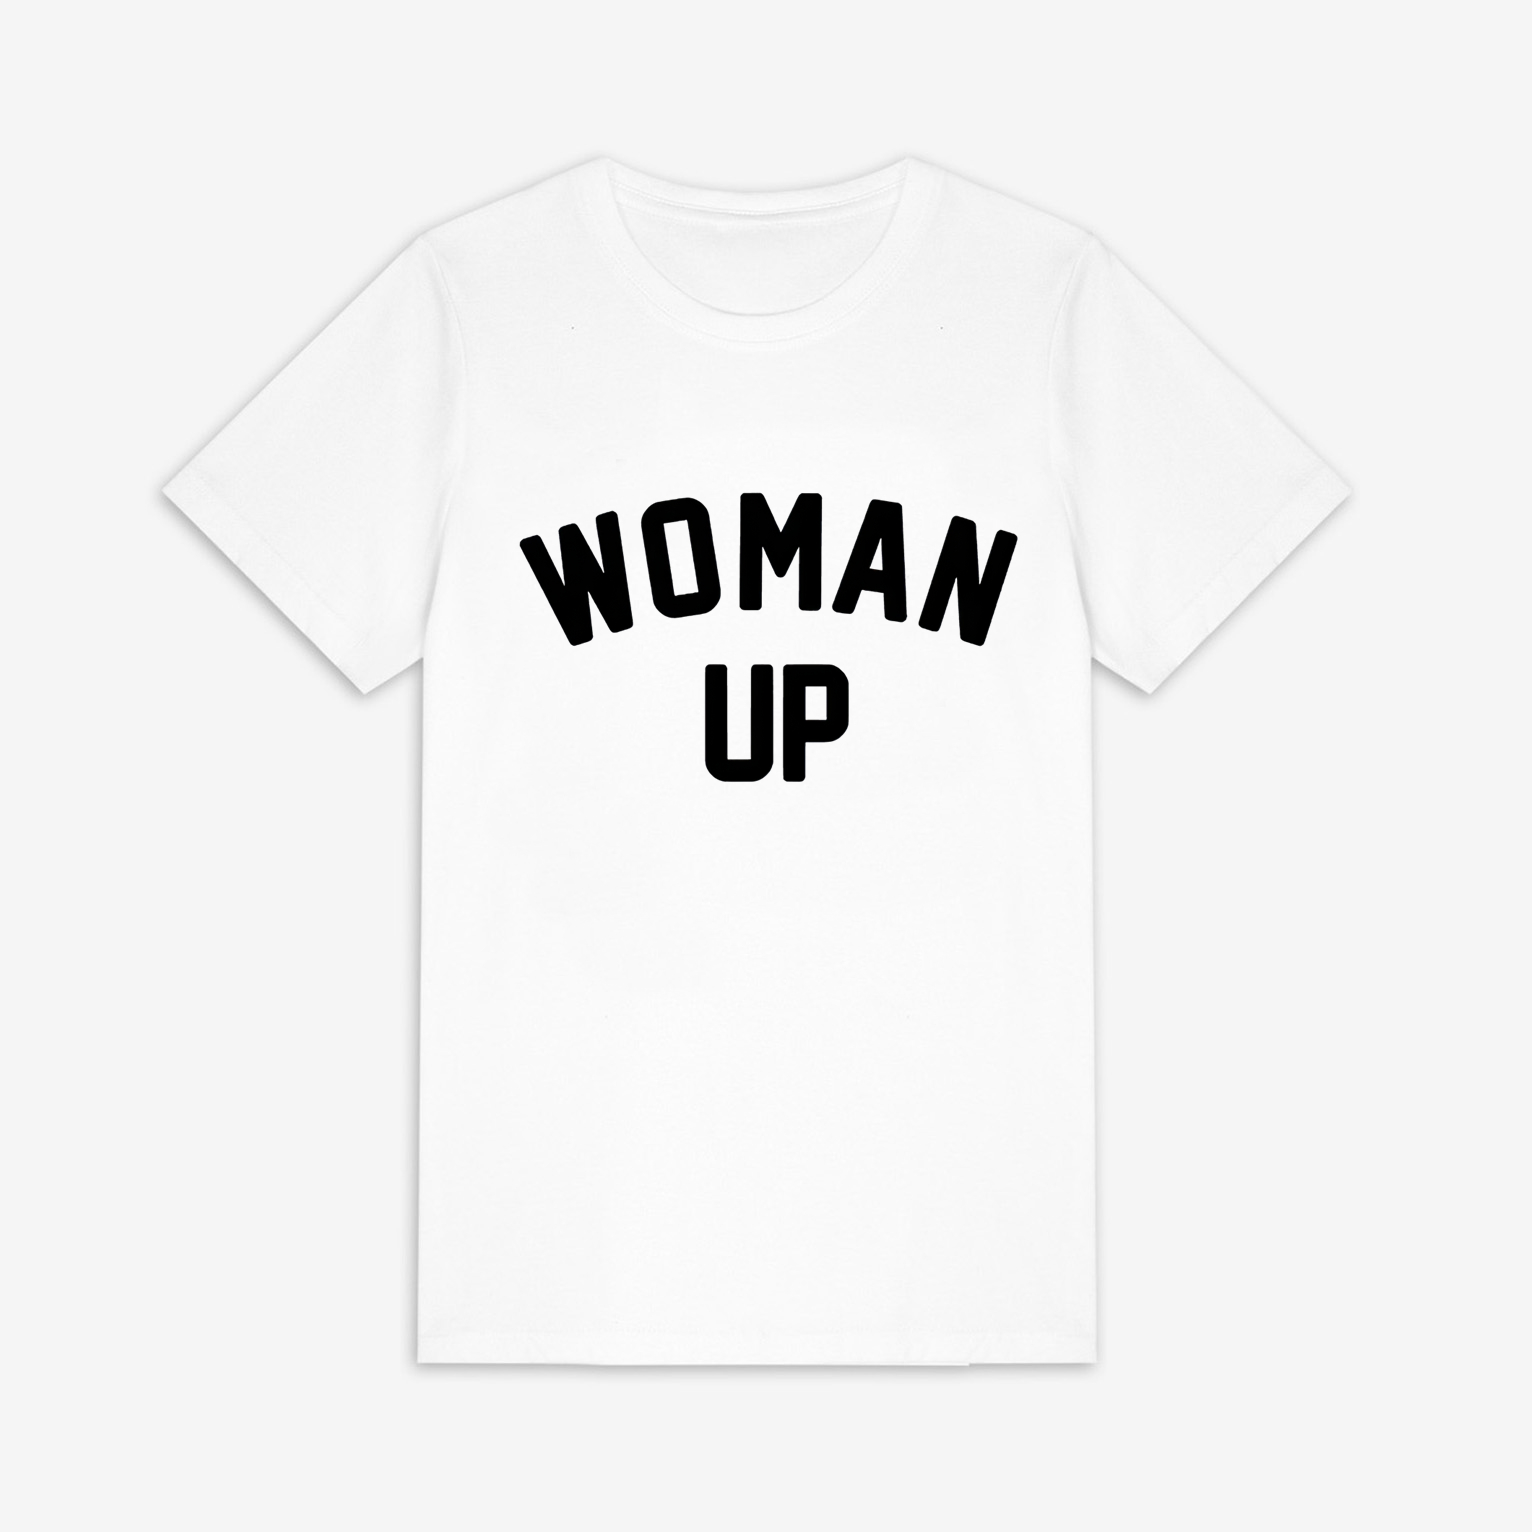 Woman Up Printed Women's T-shirt